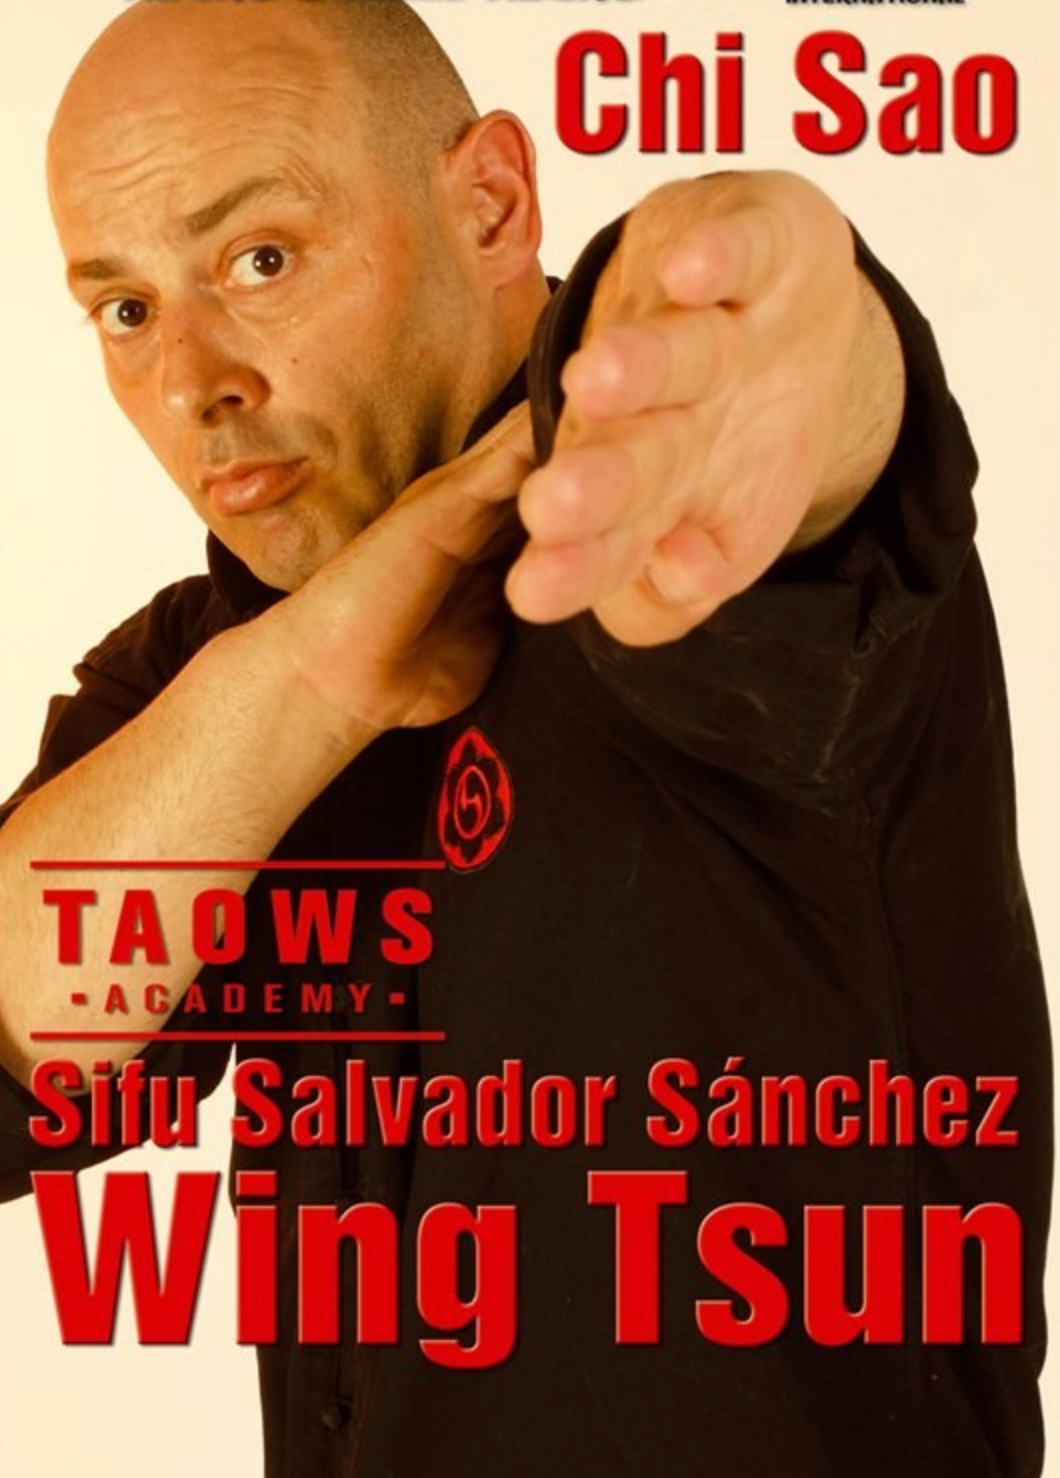 Chi Sao Wing Tsun TAOWS Academy DVD with Salvador Sanchez - Budovideos Inc